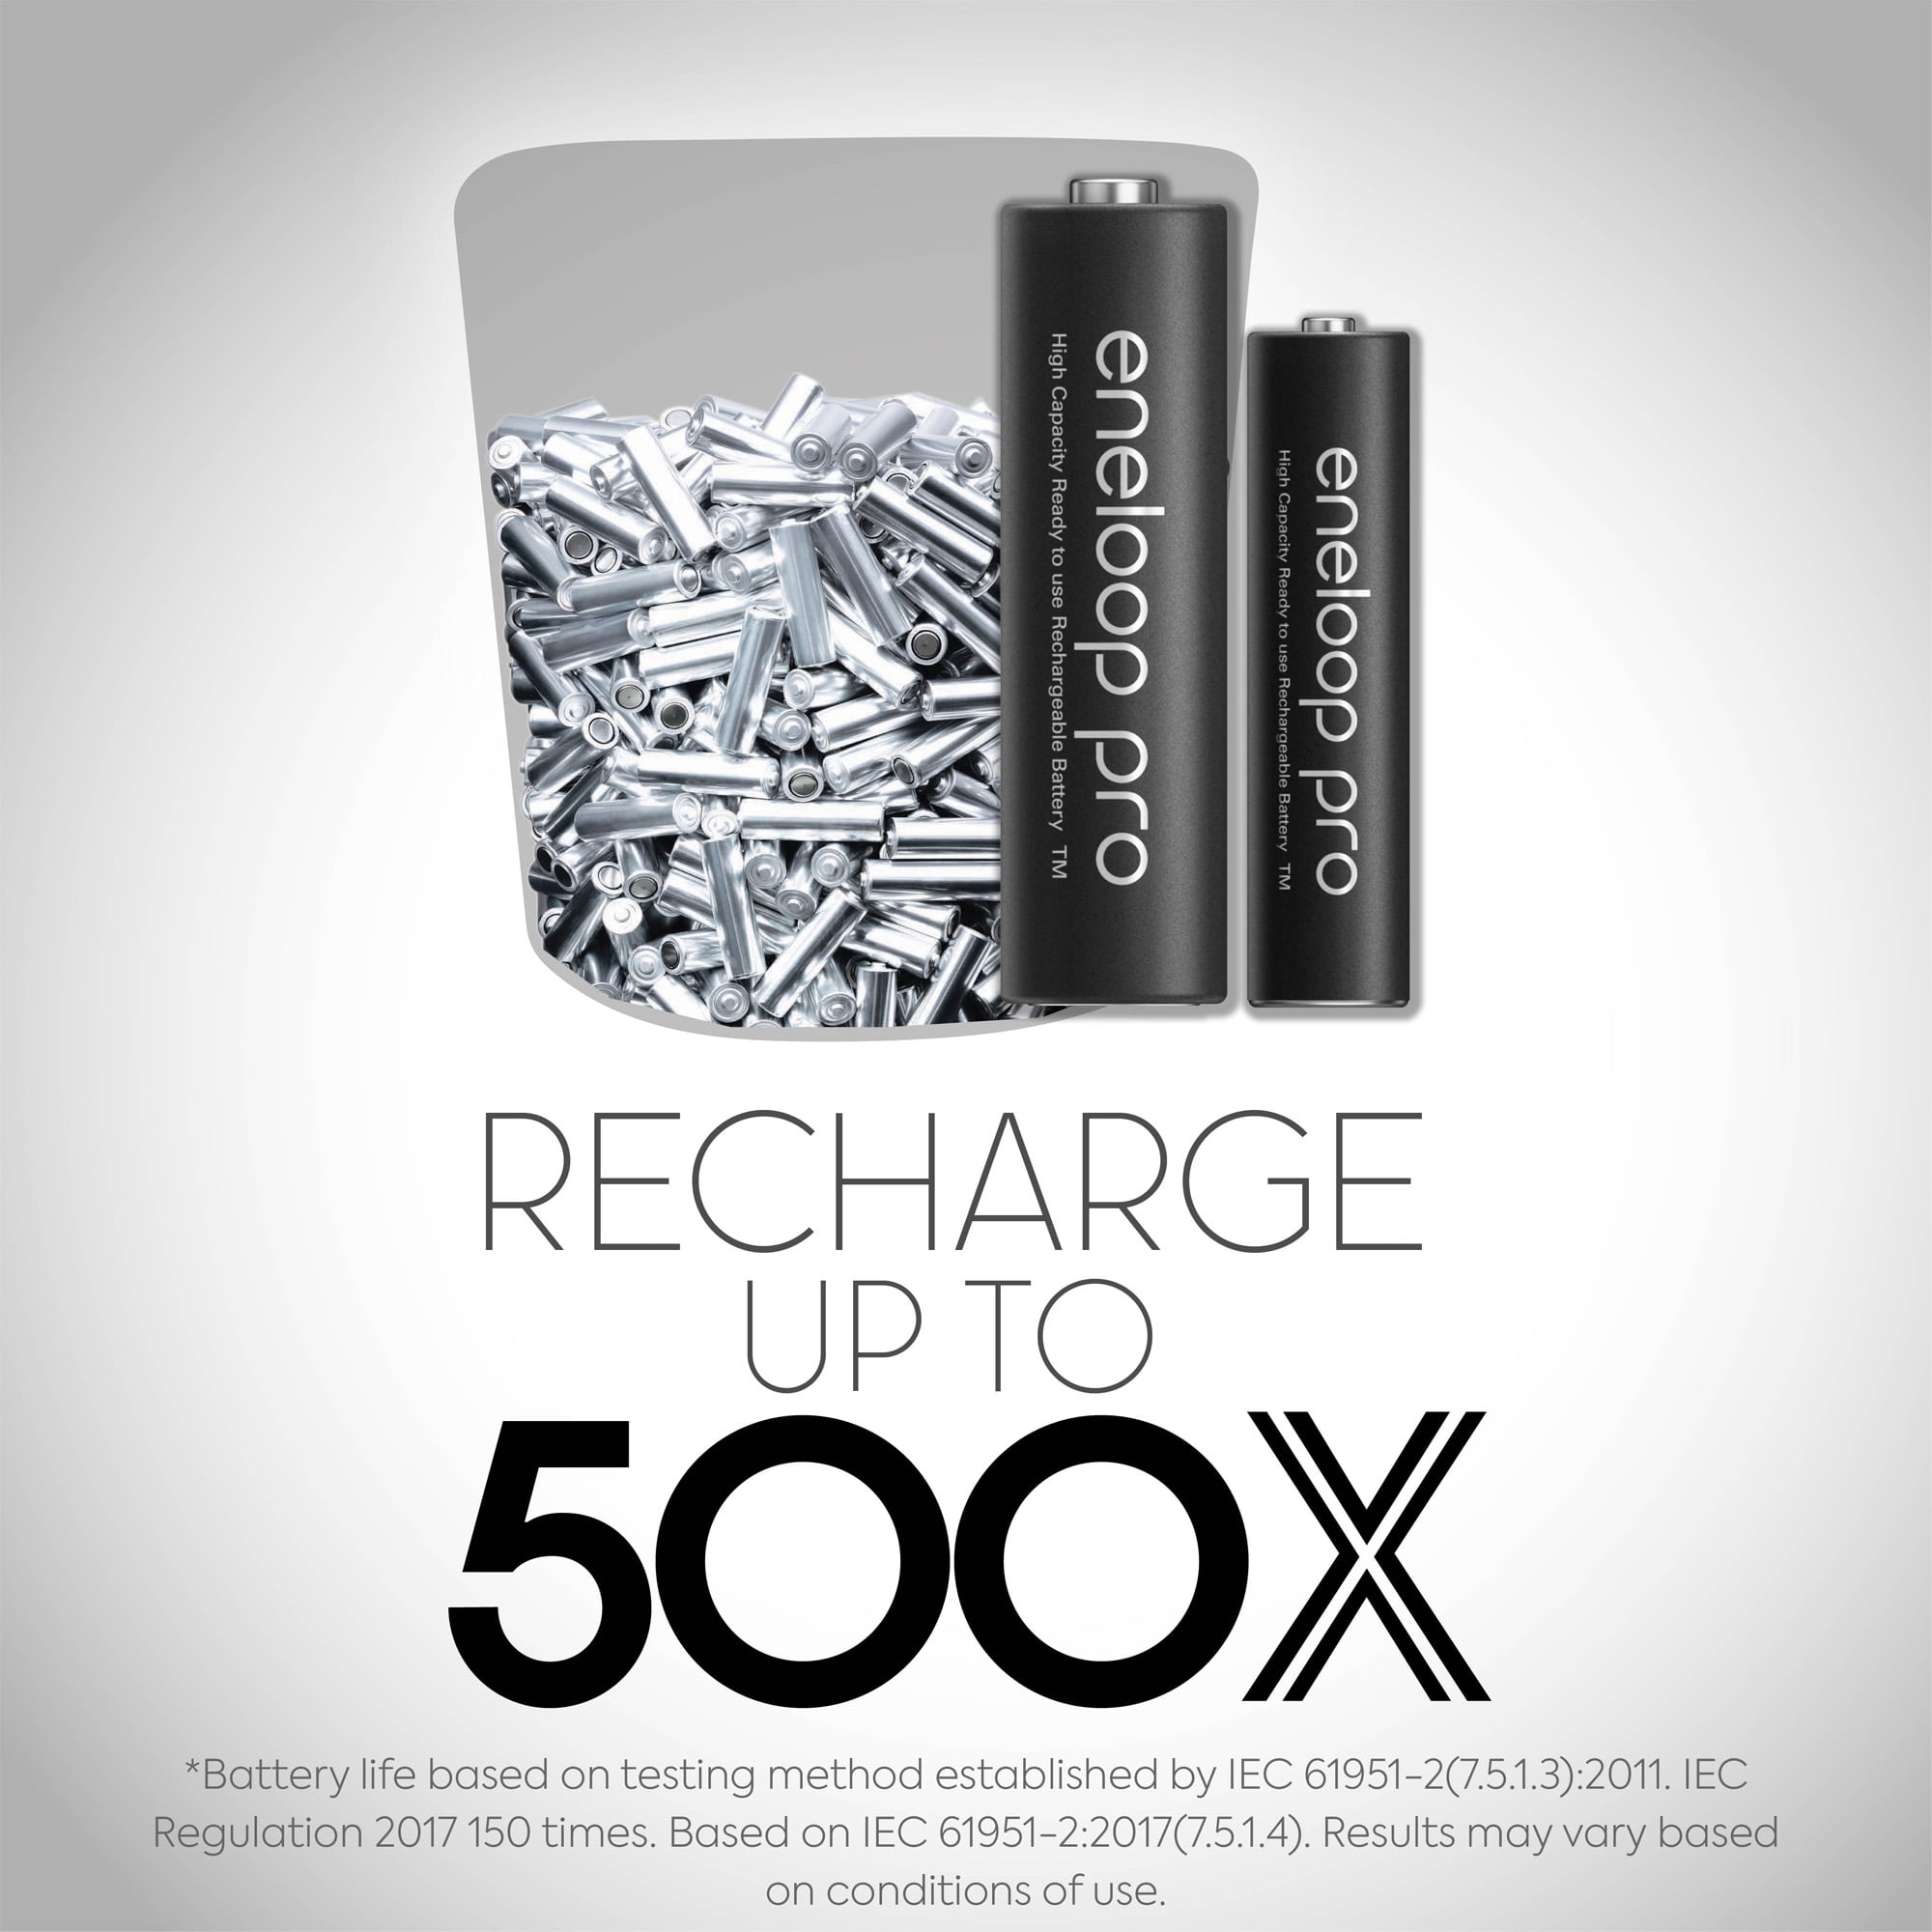 Eneloop Rechargable AA Batteries 8pk